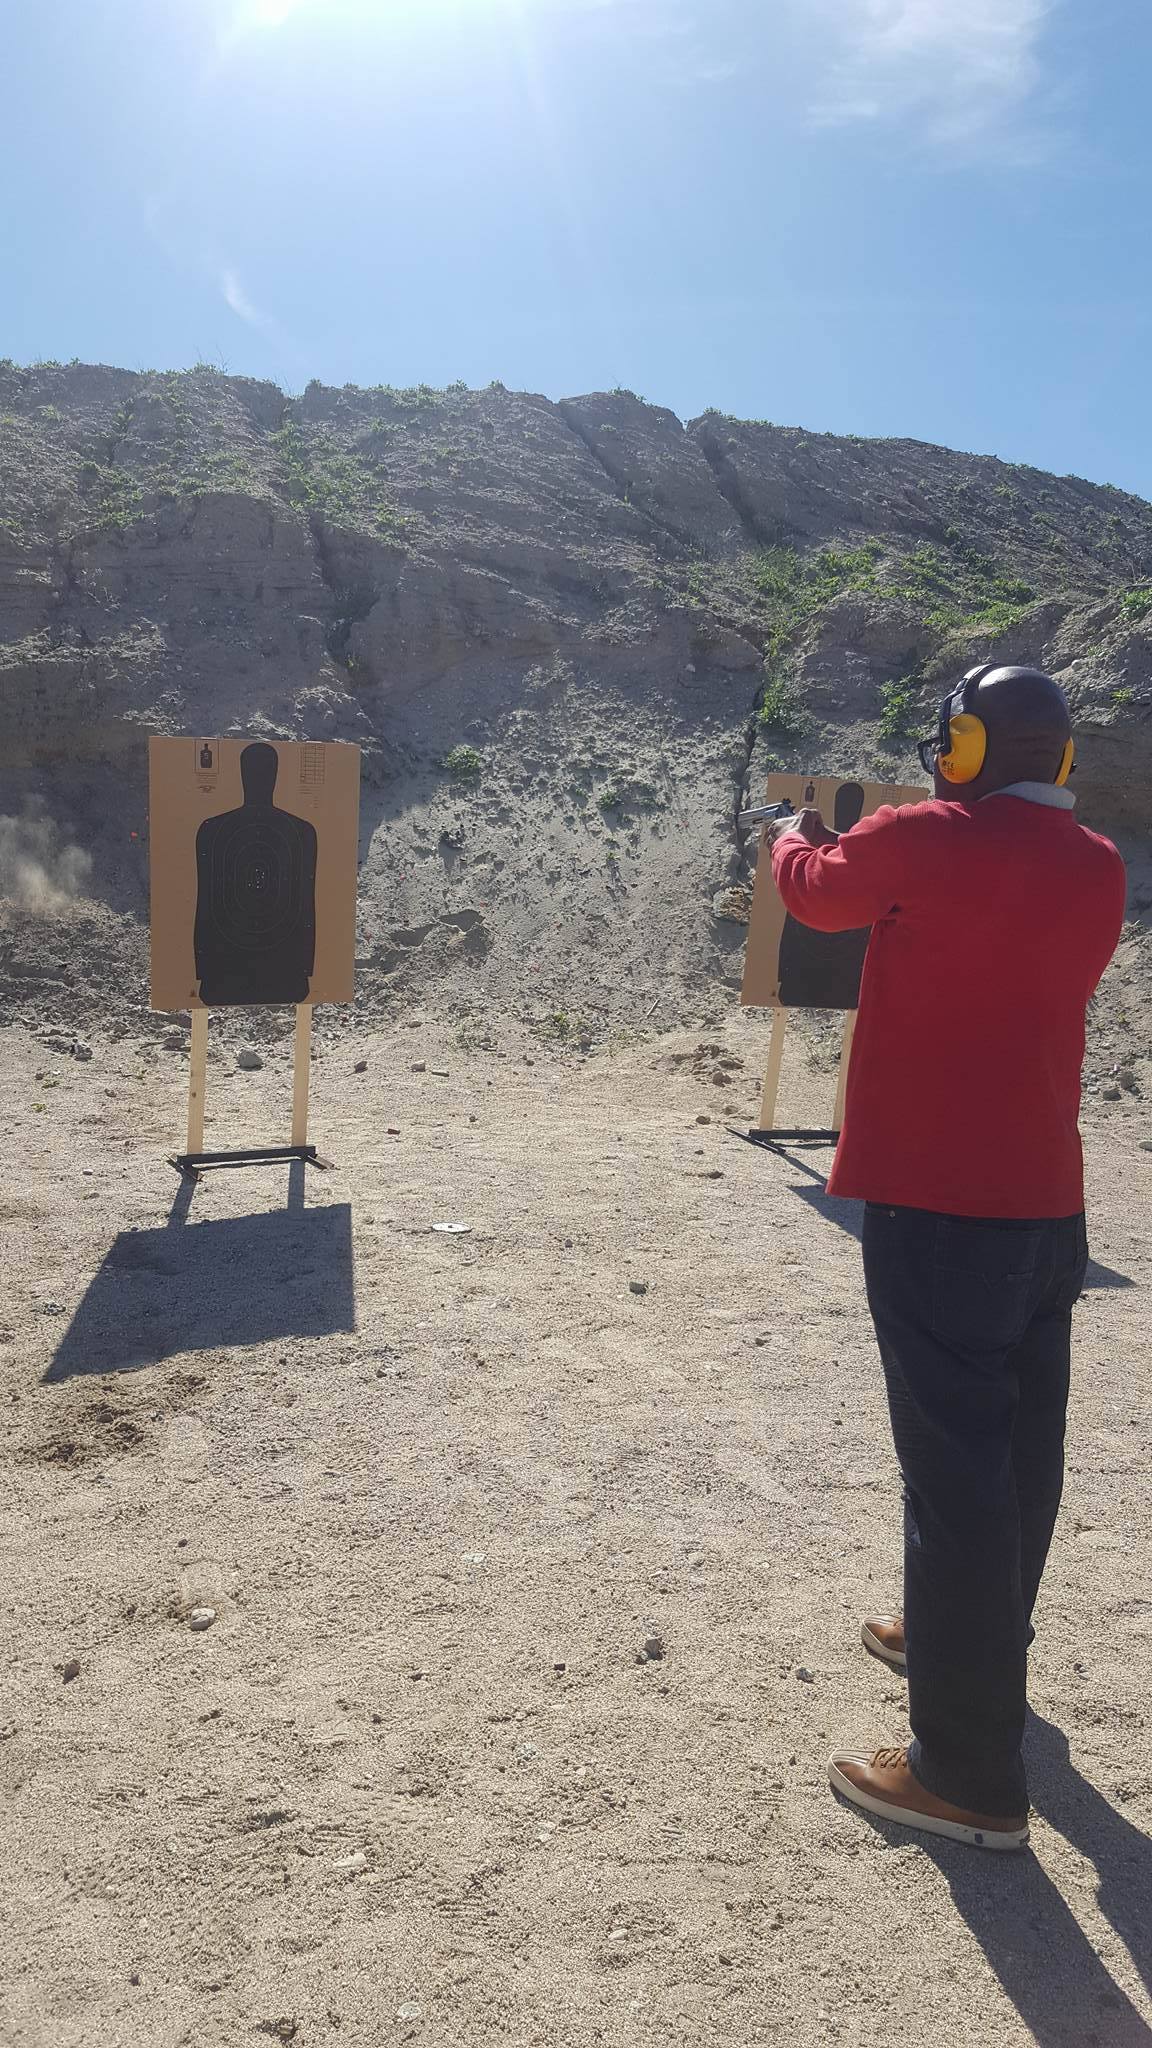 Student practicing at firing range